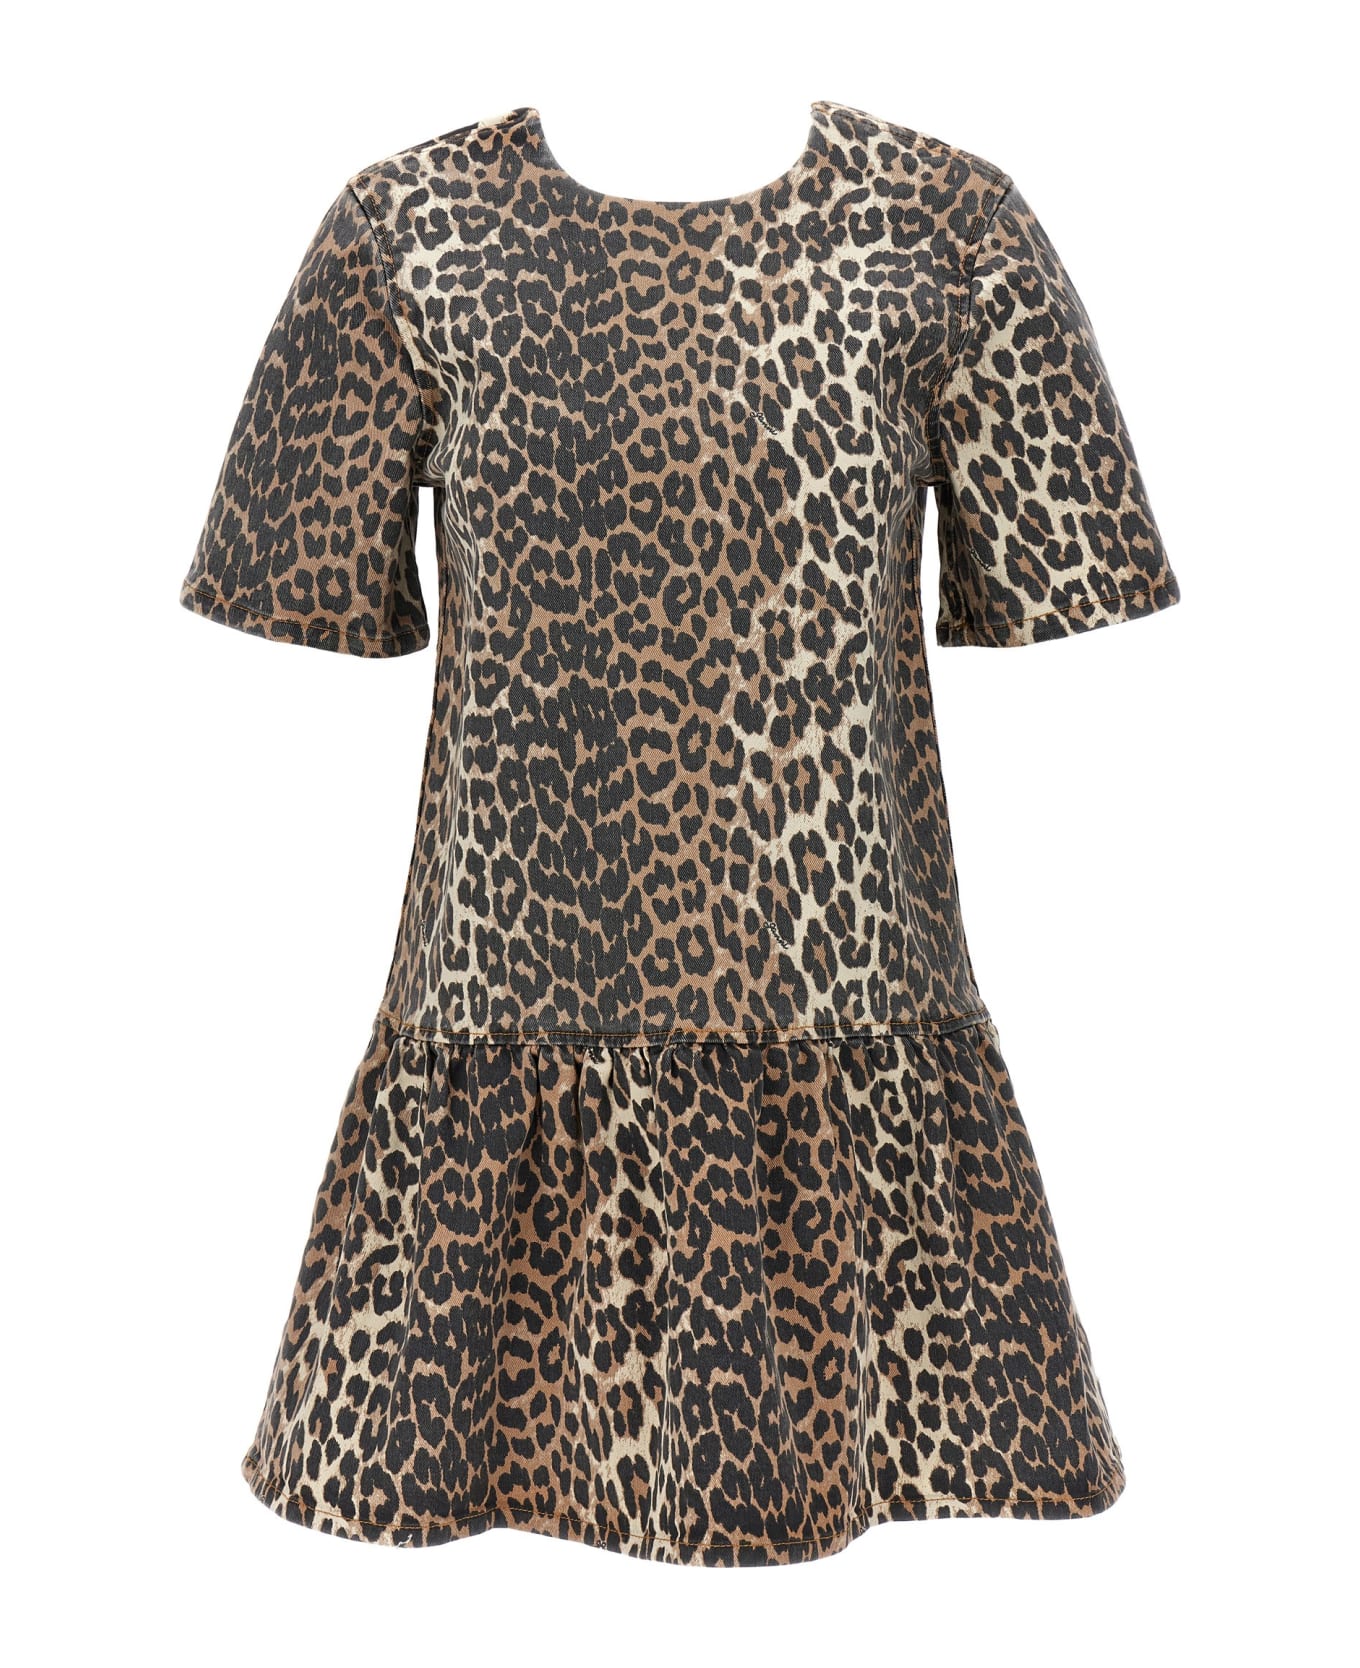 Ganni Animal Print Denim Dress - Leopard